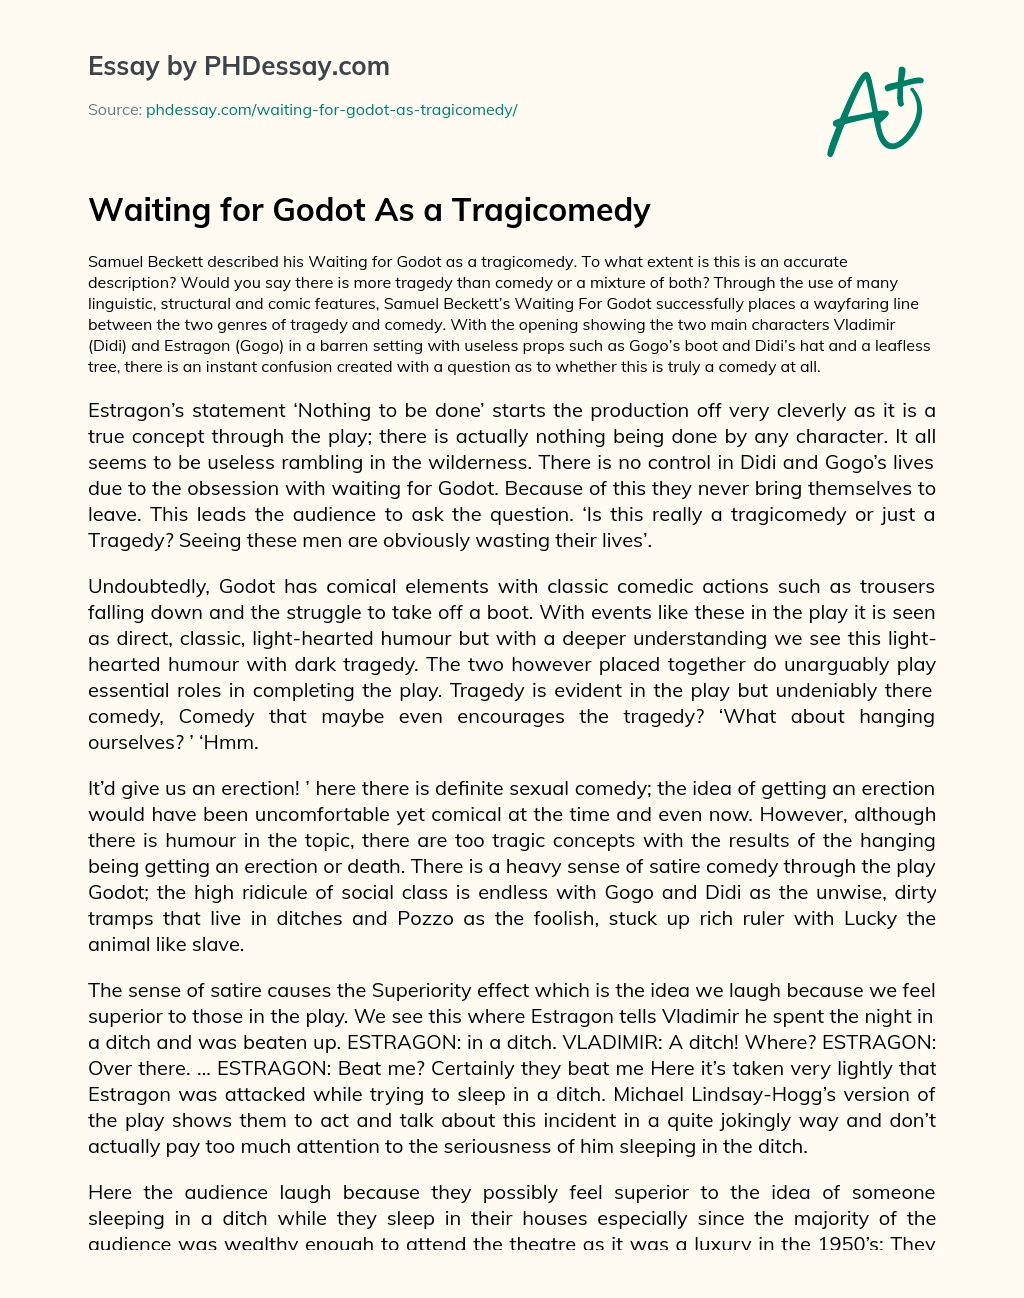 Waiting for Godot As a Tragicomedy essay